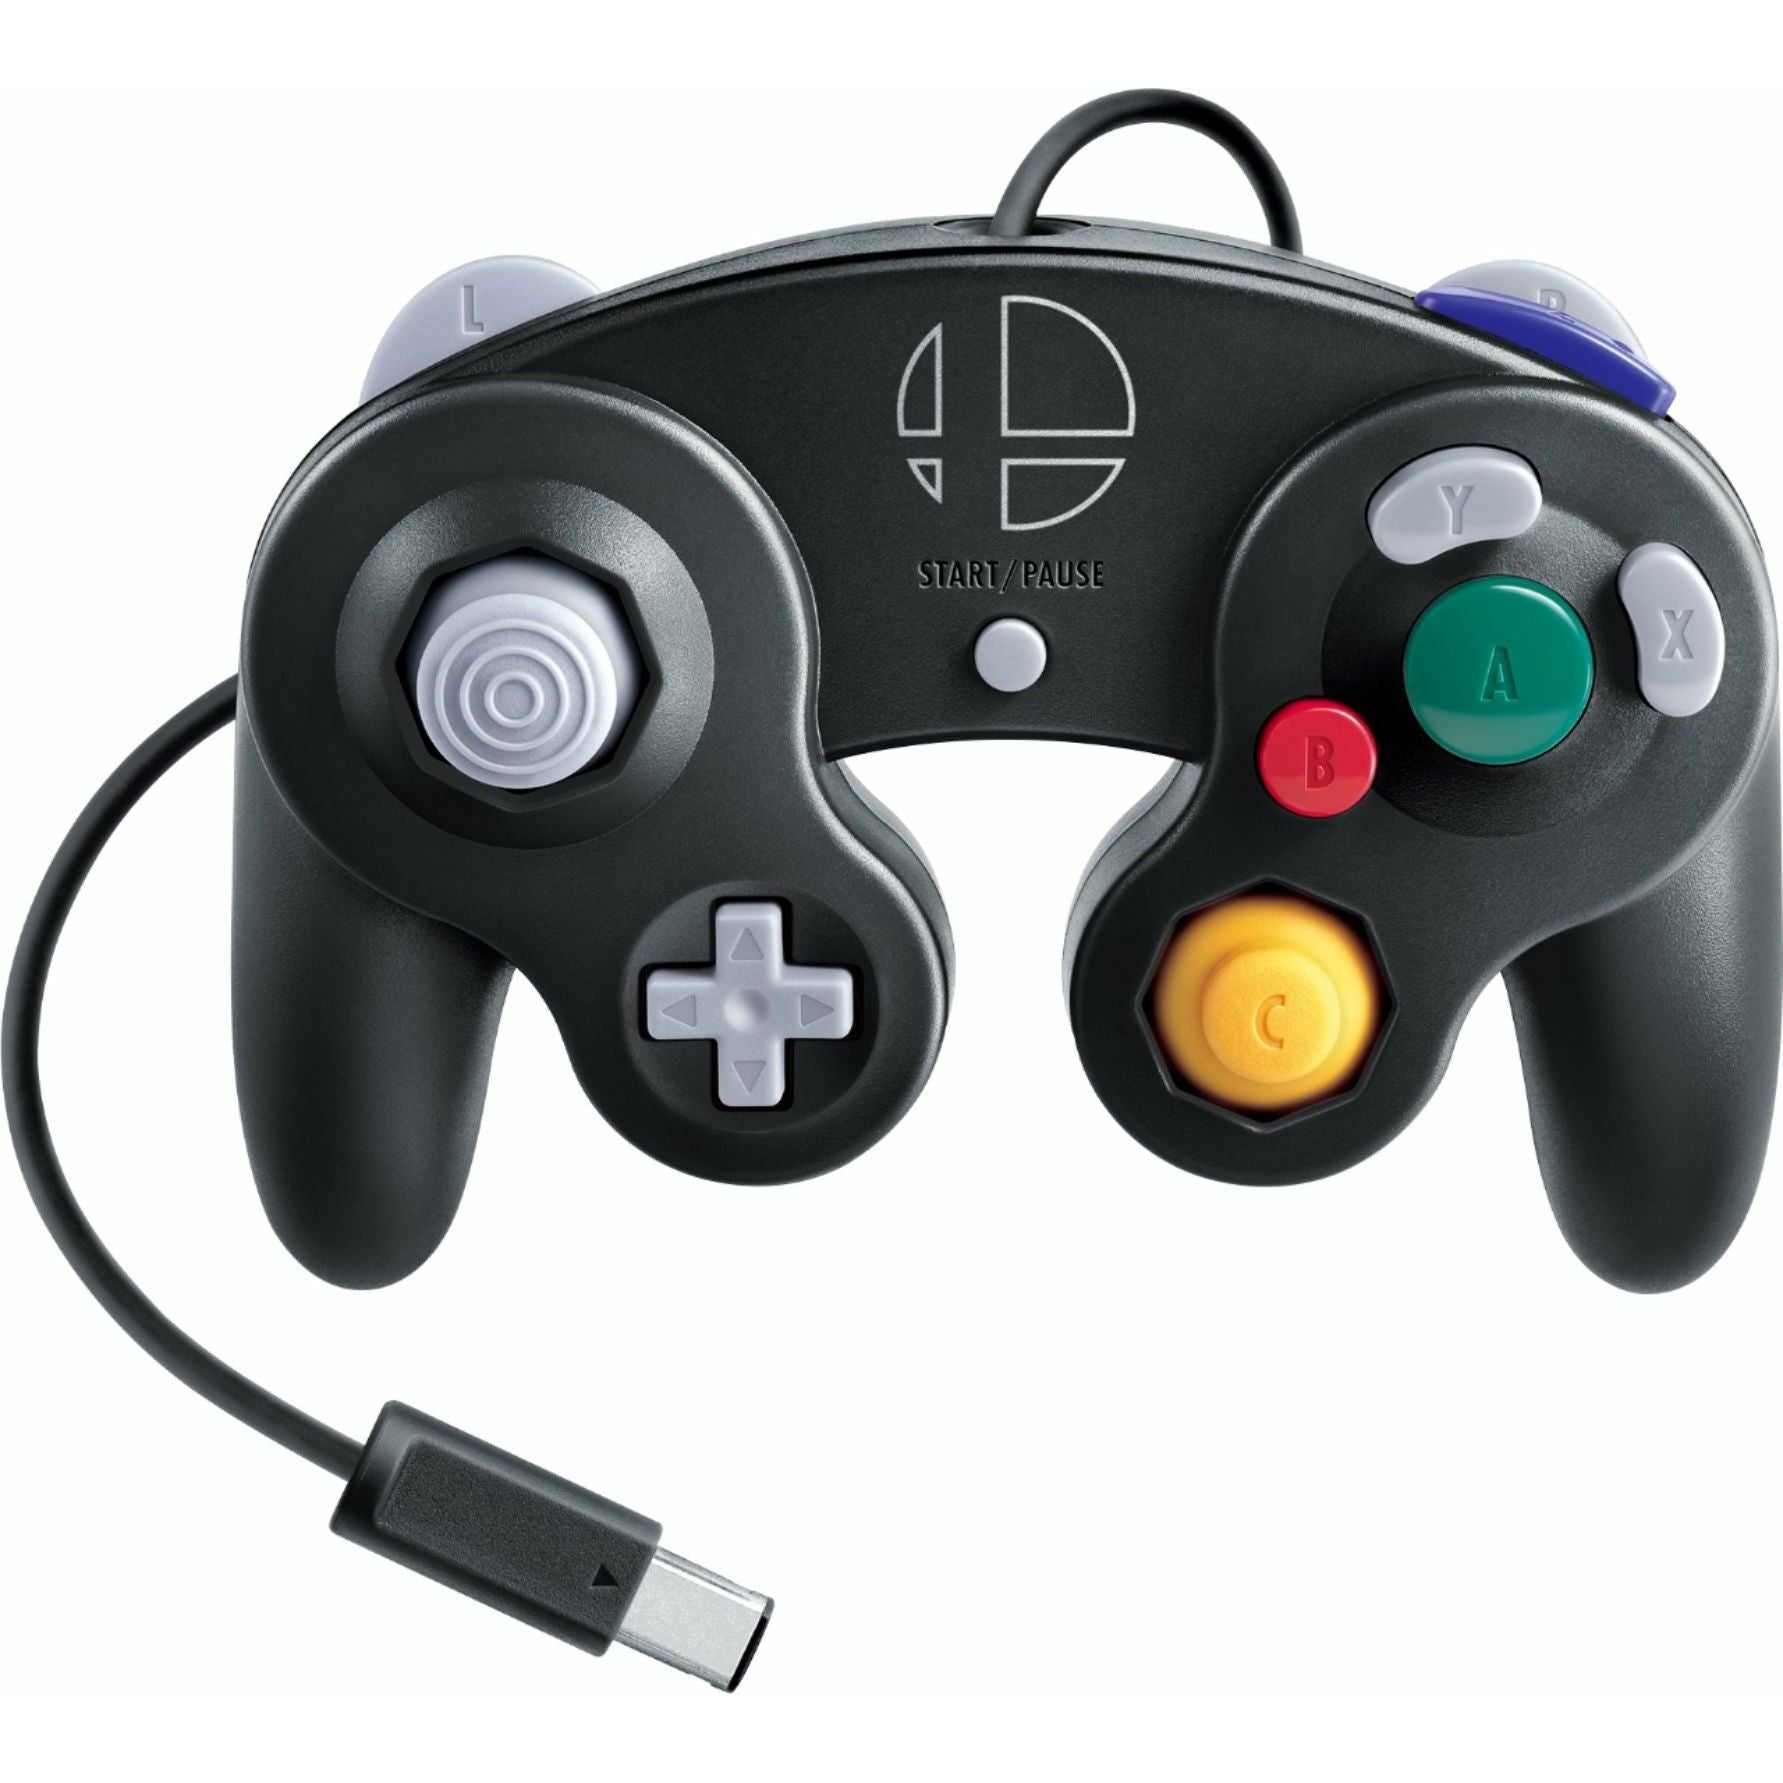 GC - Super Smash Bros. Ultimate Edition Controller GameCube